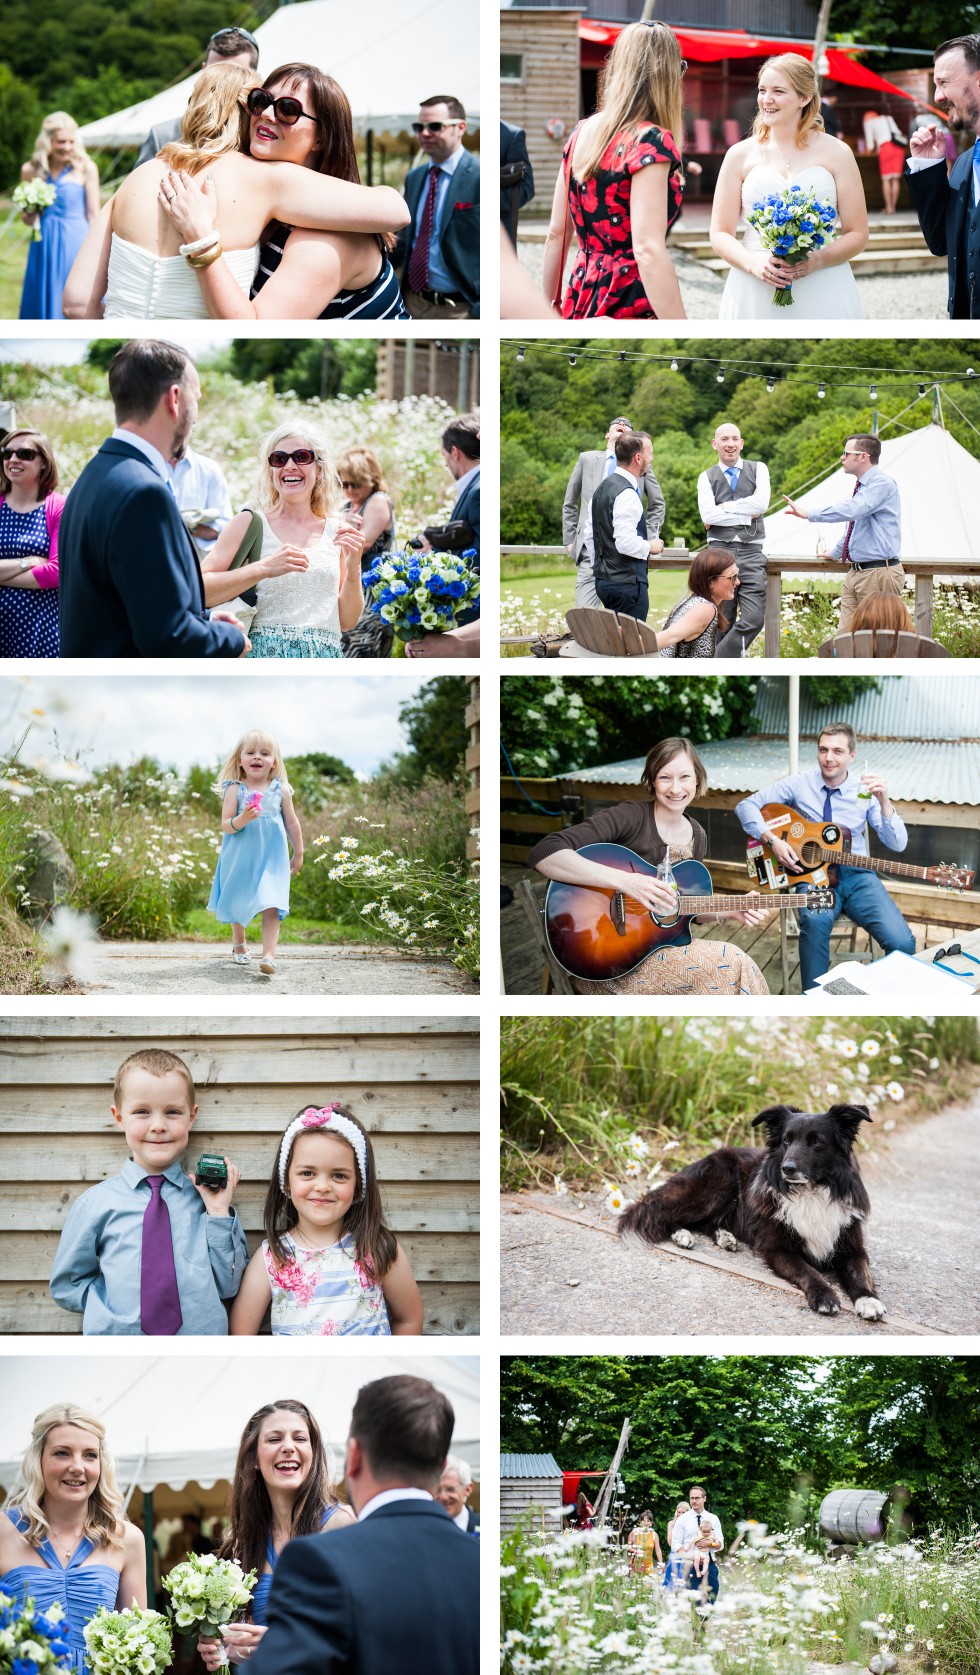 Lesley & Mat wedding at fforest manorafon collage 1